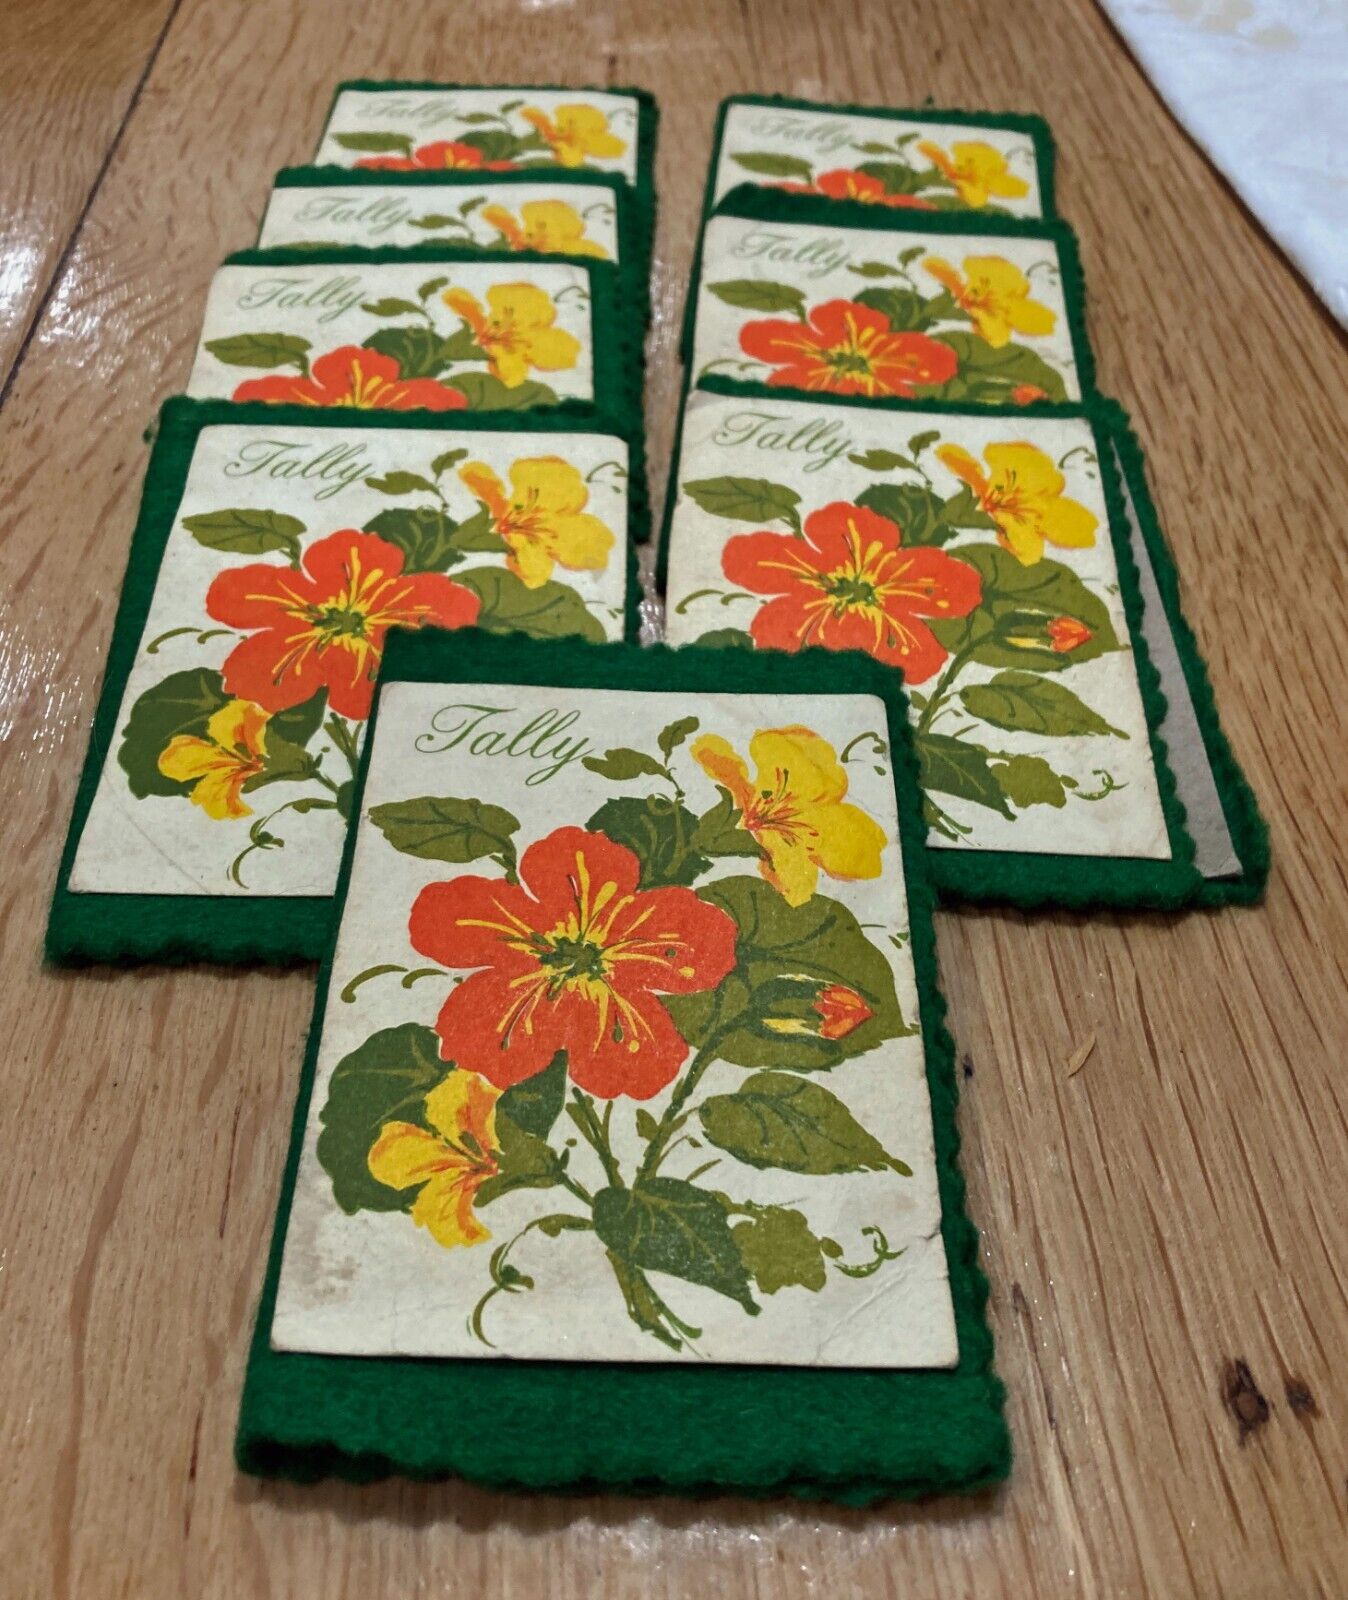 Vintage Bridge Player's Tally Cards Handmade Set of  Felt Covers